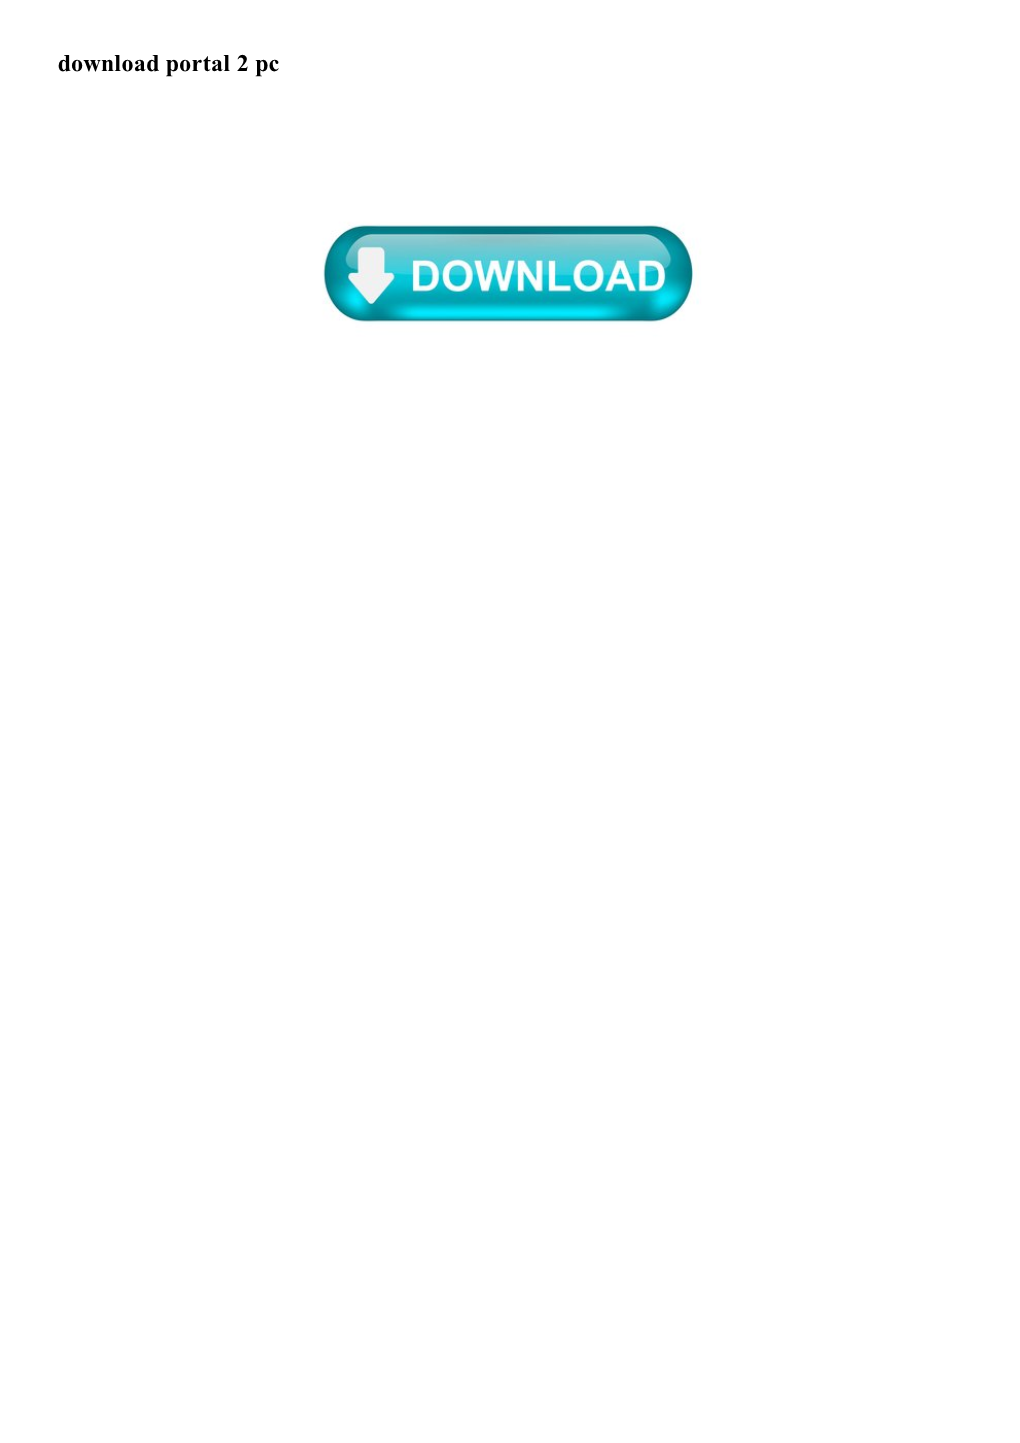 Download Portal 2 Pc Portal 2 for Windows